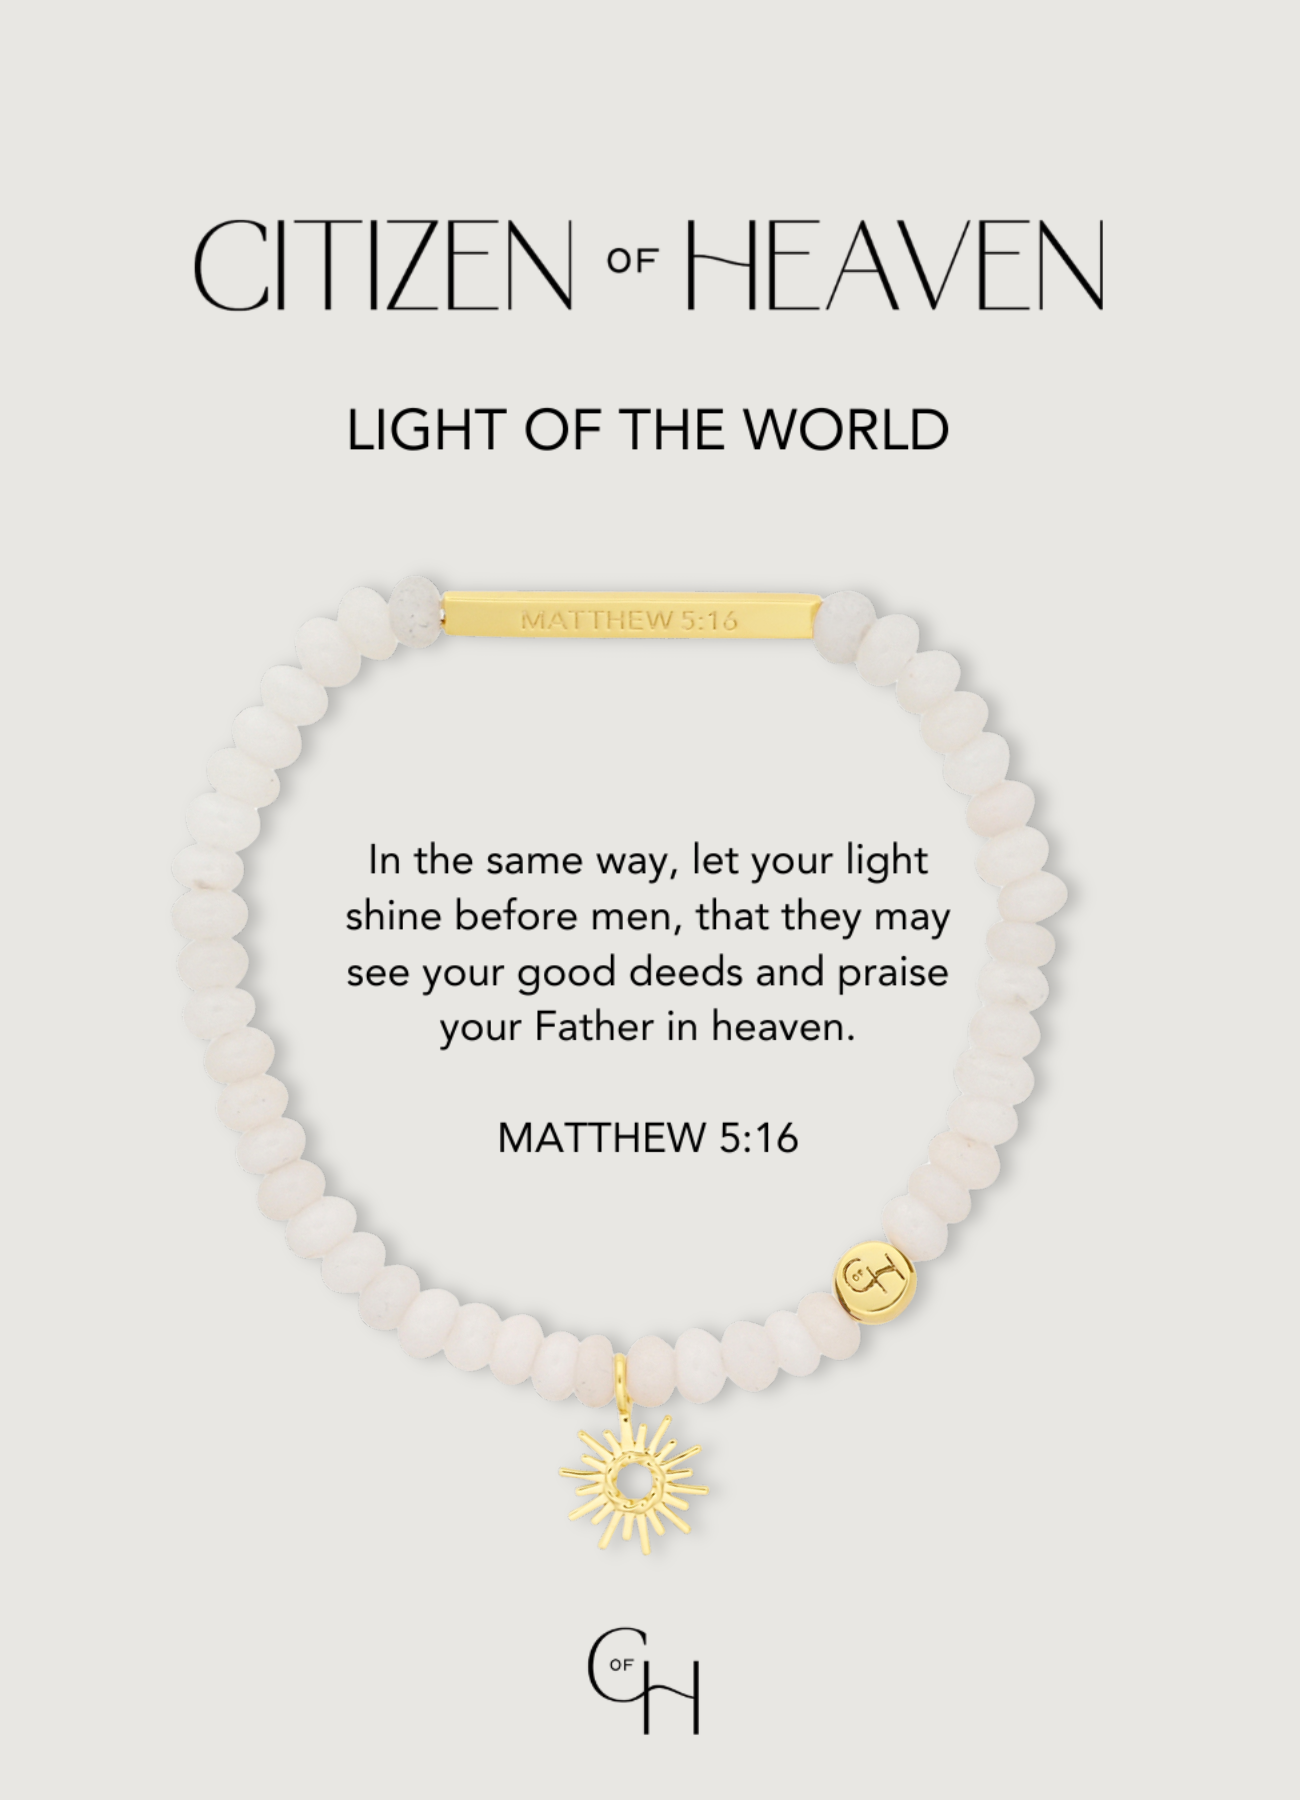 Light of the World Scripture Bracelet